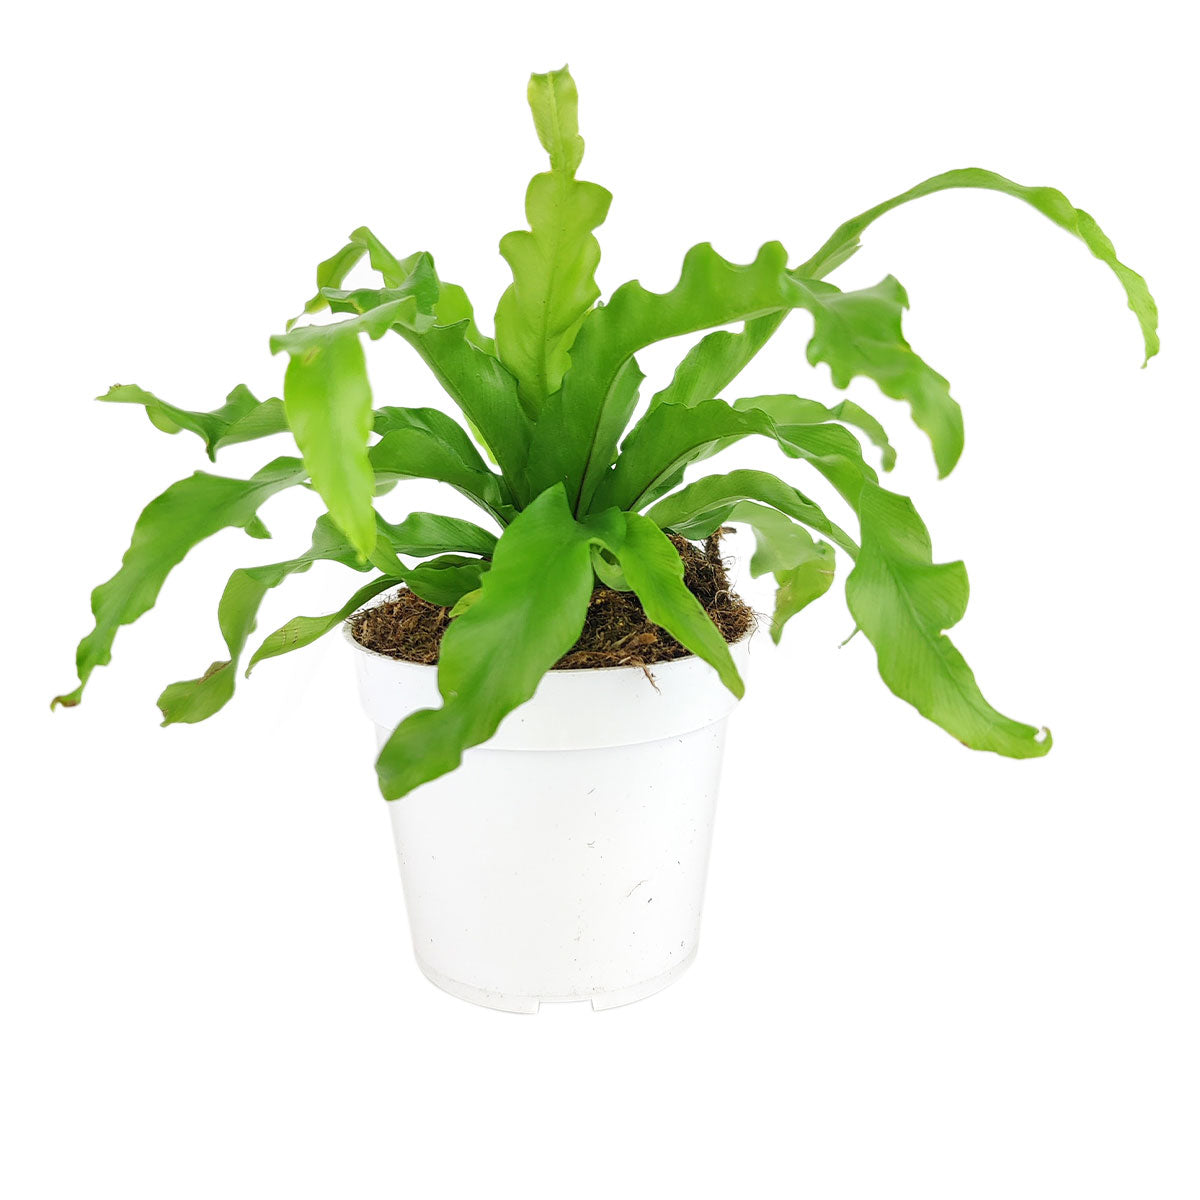 Birdnest fern, best air-purifying plant, low-light houseplant